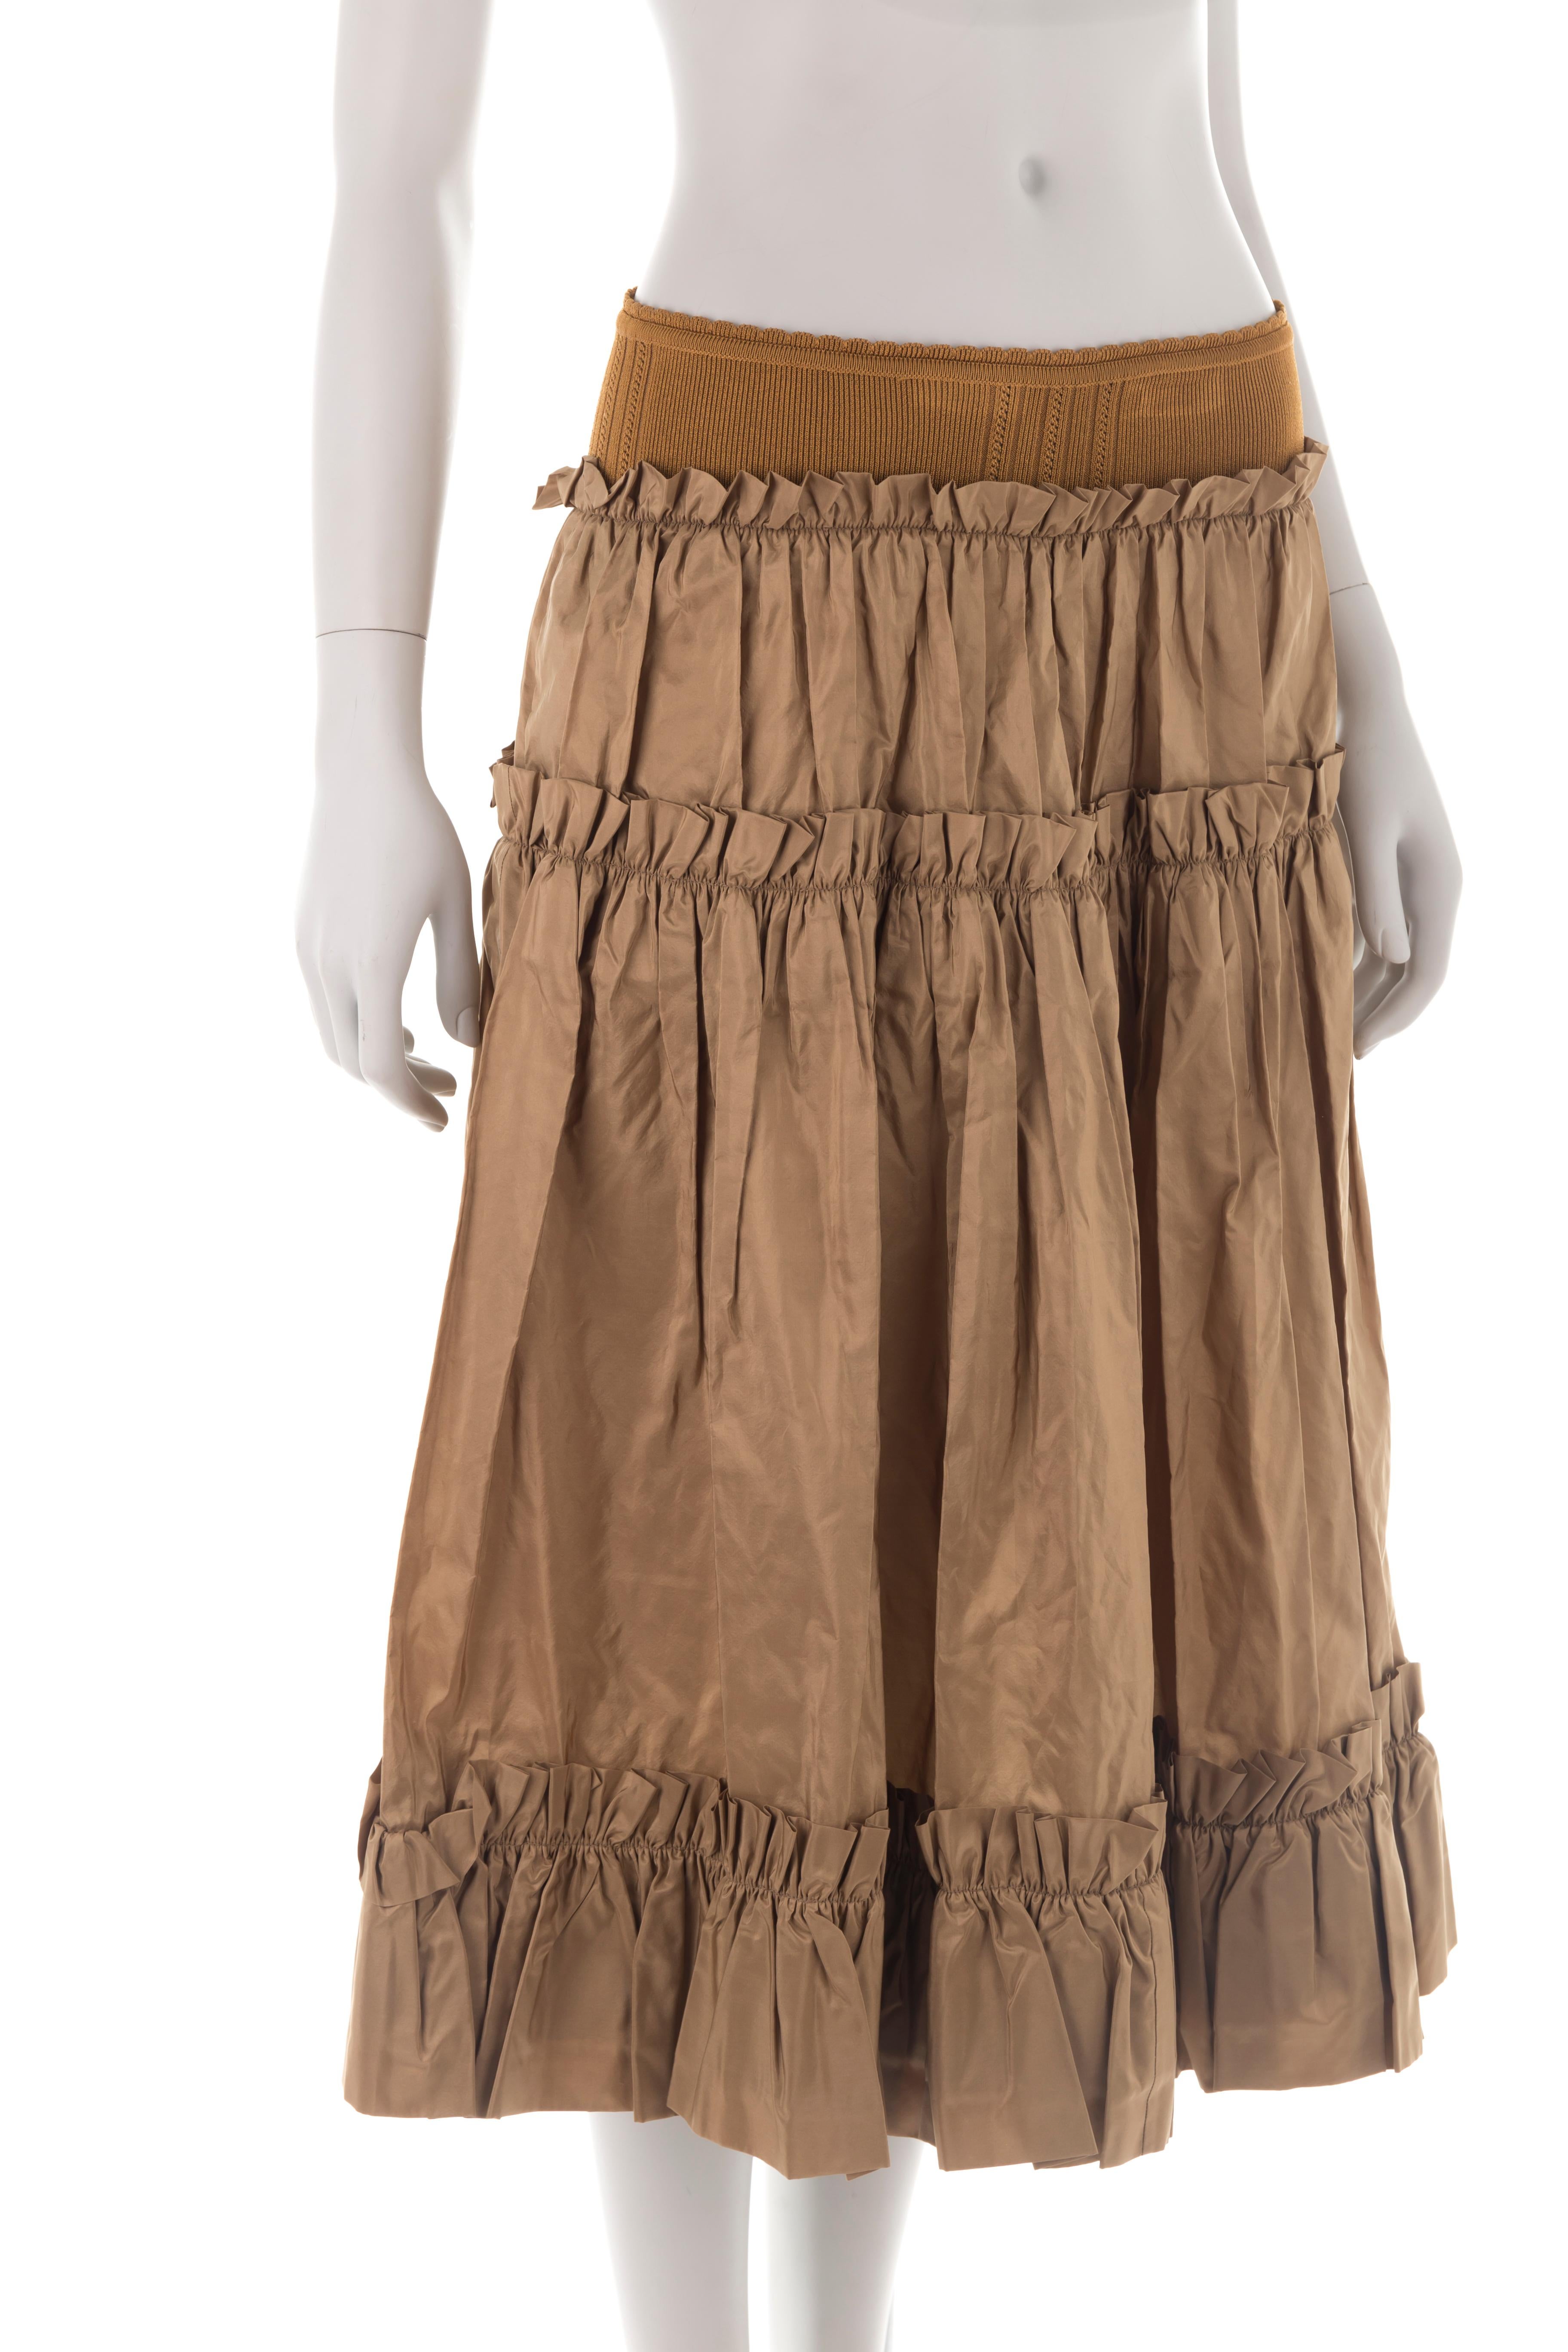 - Roberto Cavalli multi-panel maxi skirt
- Sold by Gold Palms Vintage
- Spring/summer 2005
- Khaki taffeta boho style skirt
- Elastic waistband
- Low rise fit
- Pinch marks on the waistband
- Size M
